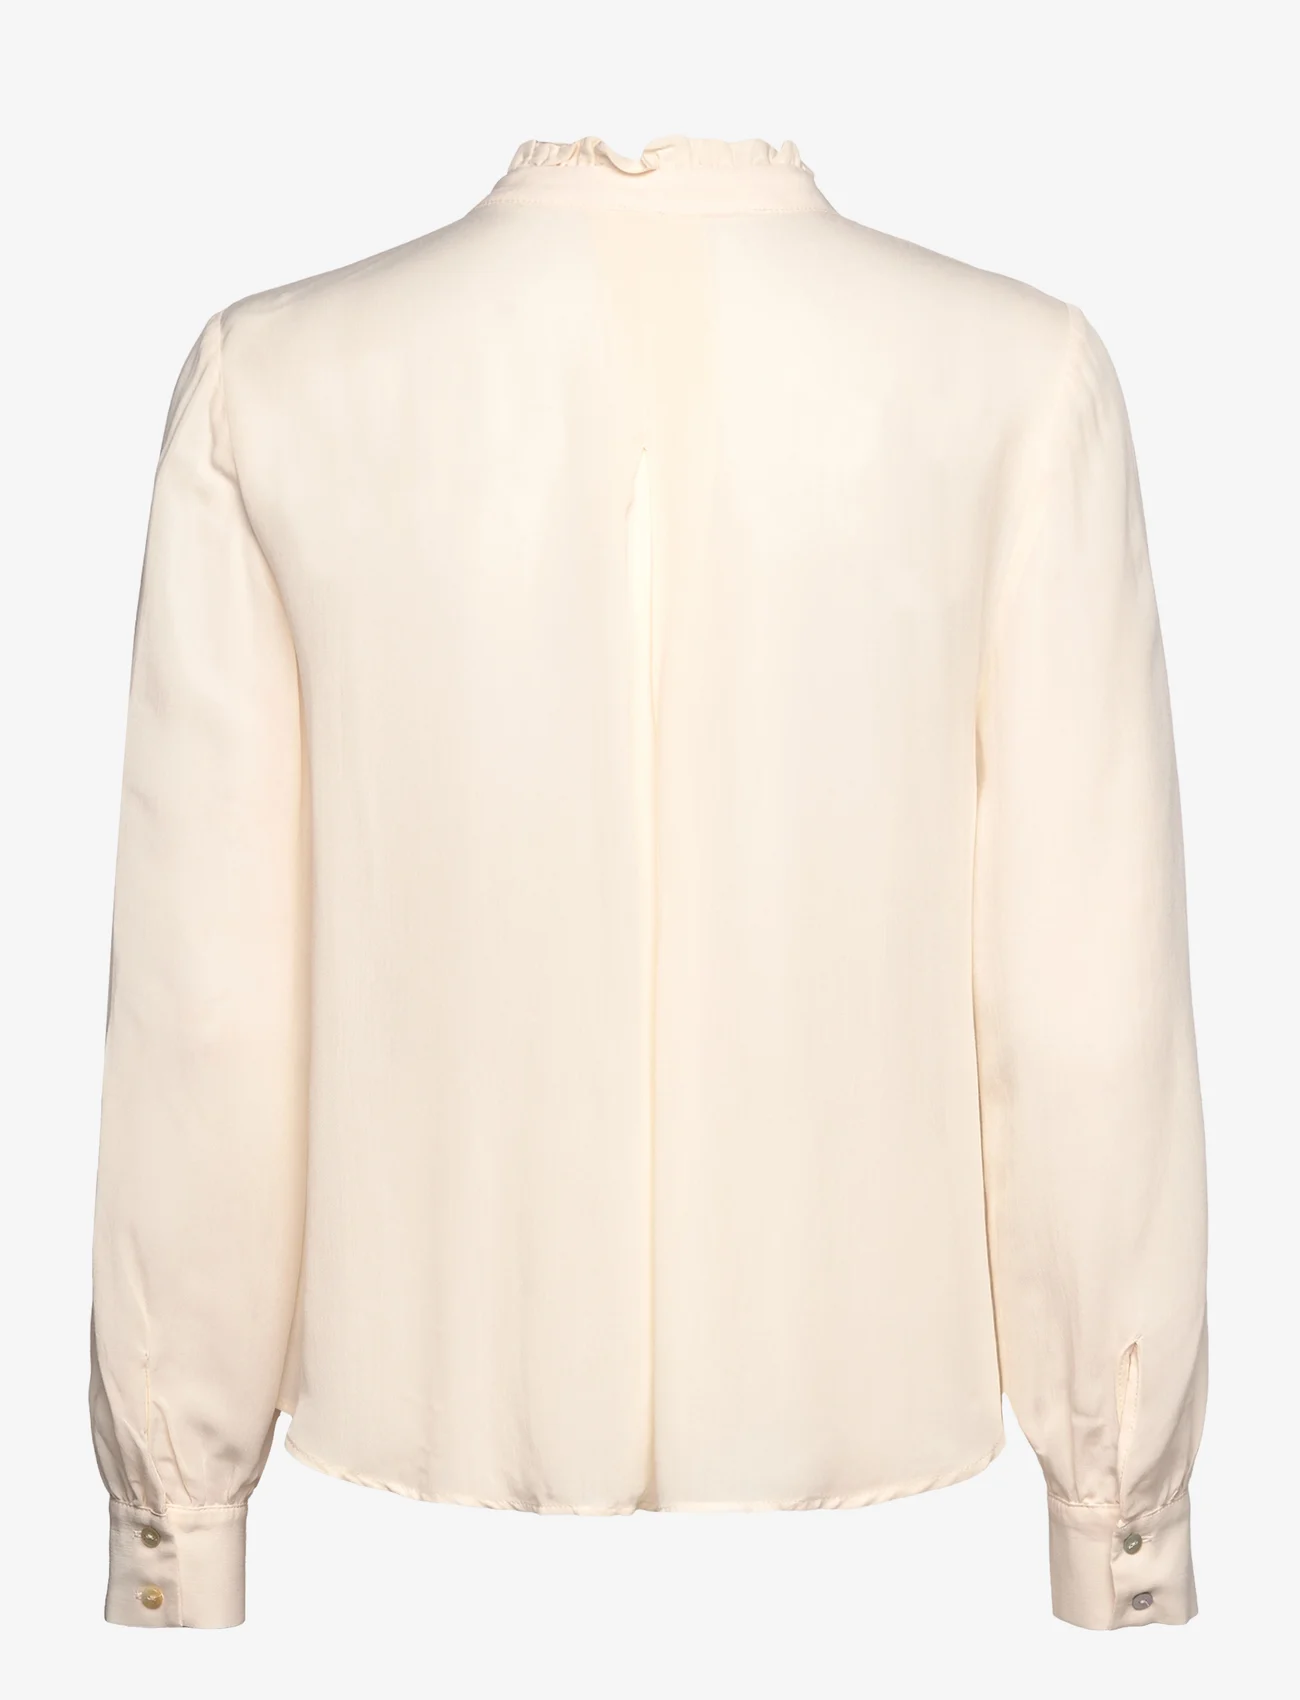 Mango - Lace trim shirt - langærmede bluser - natural white - 1